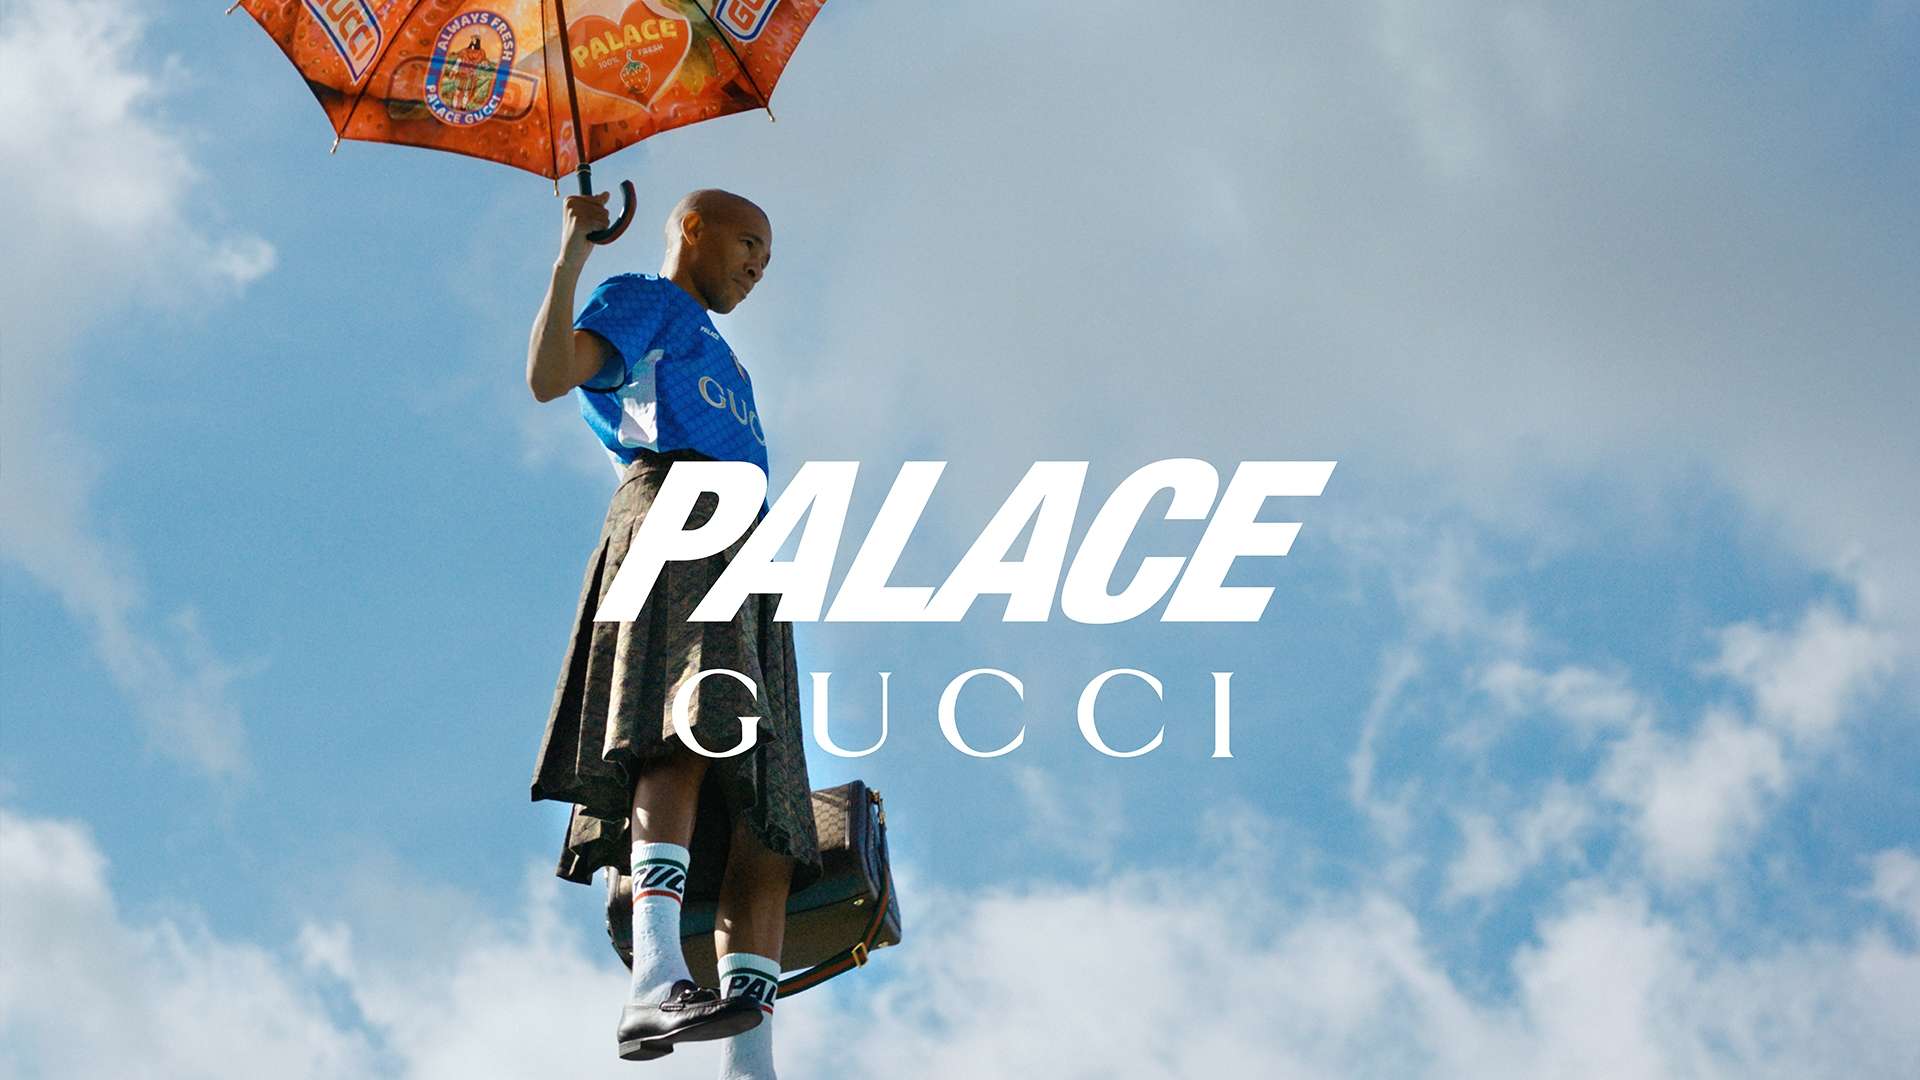 Palace x Gucci Promotional image